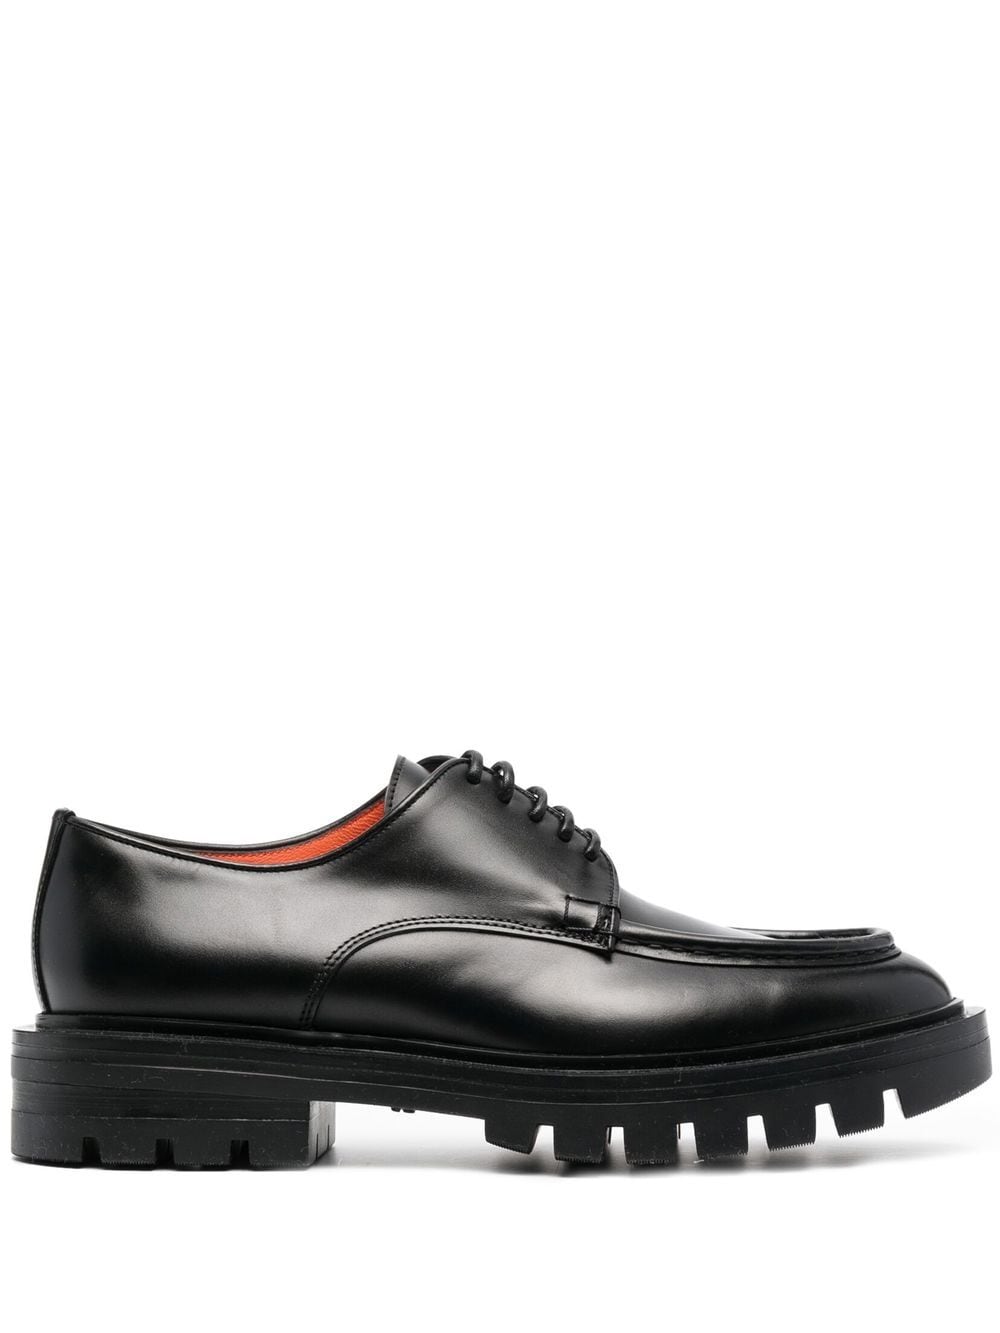 Santoni 35mm leather Oxford shoes - Black von Santoni